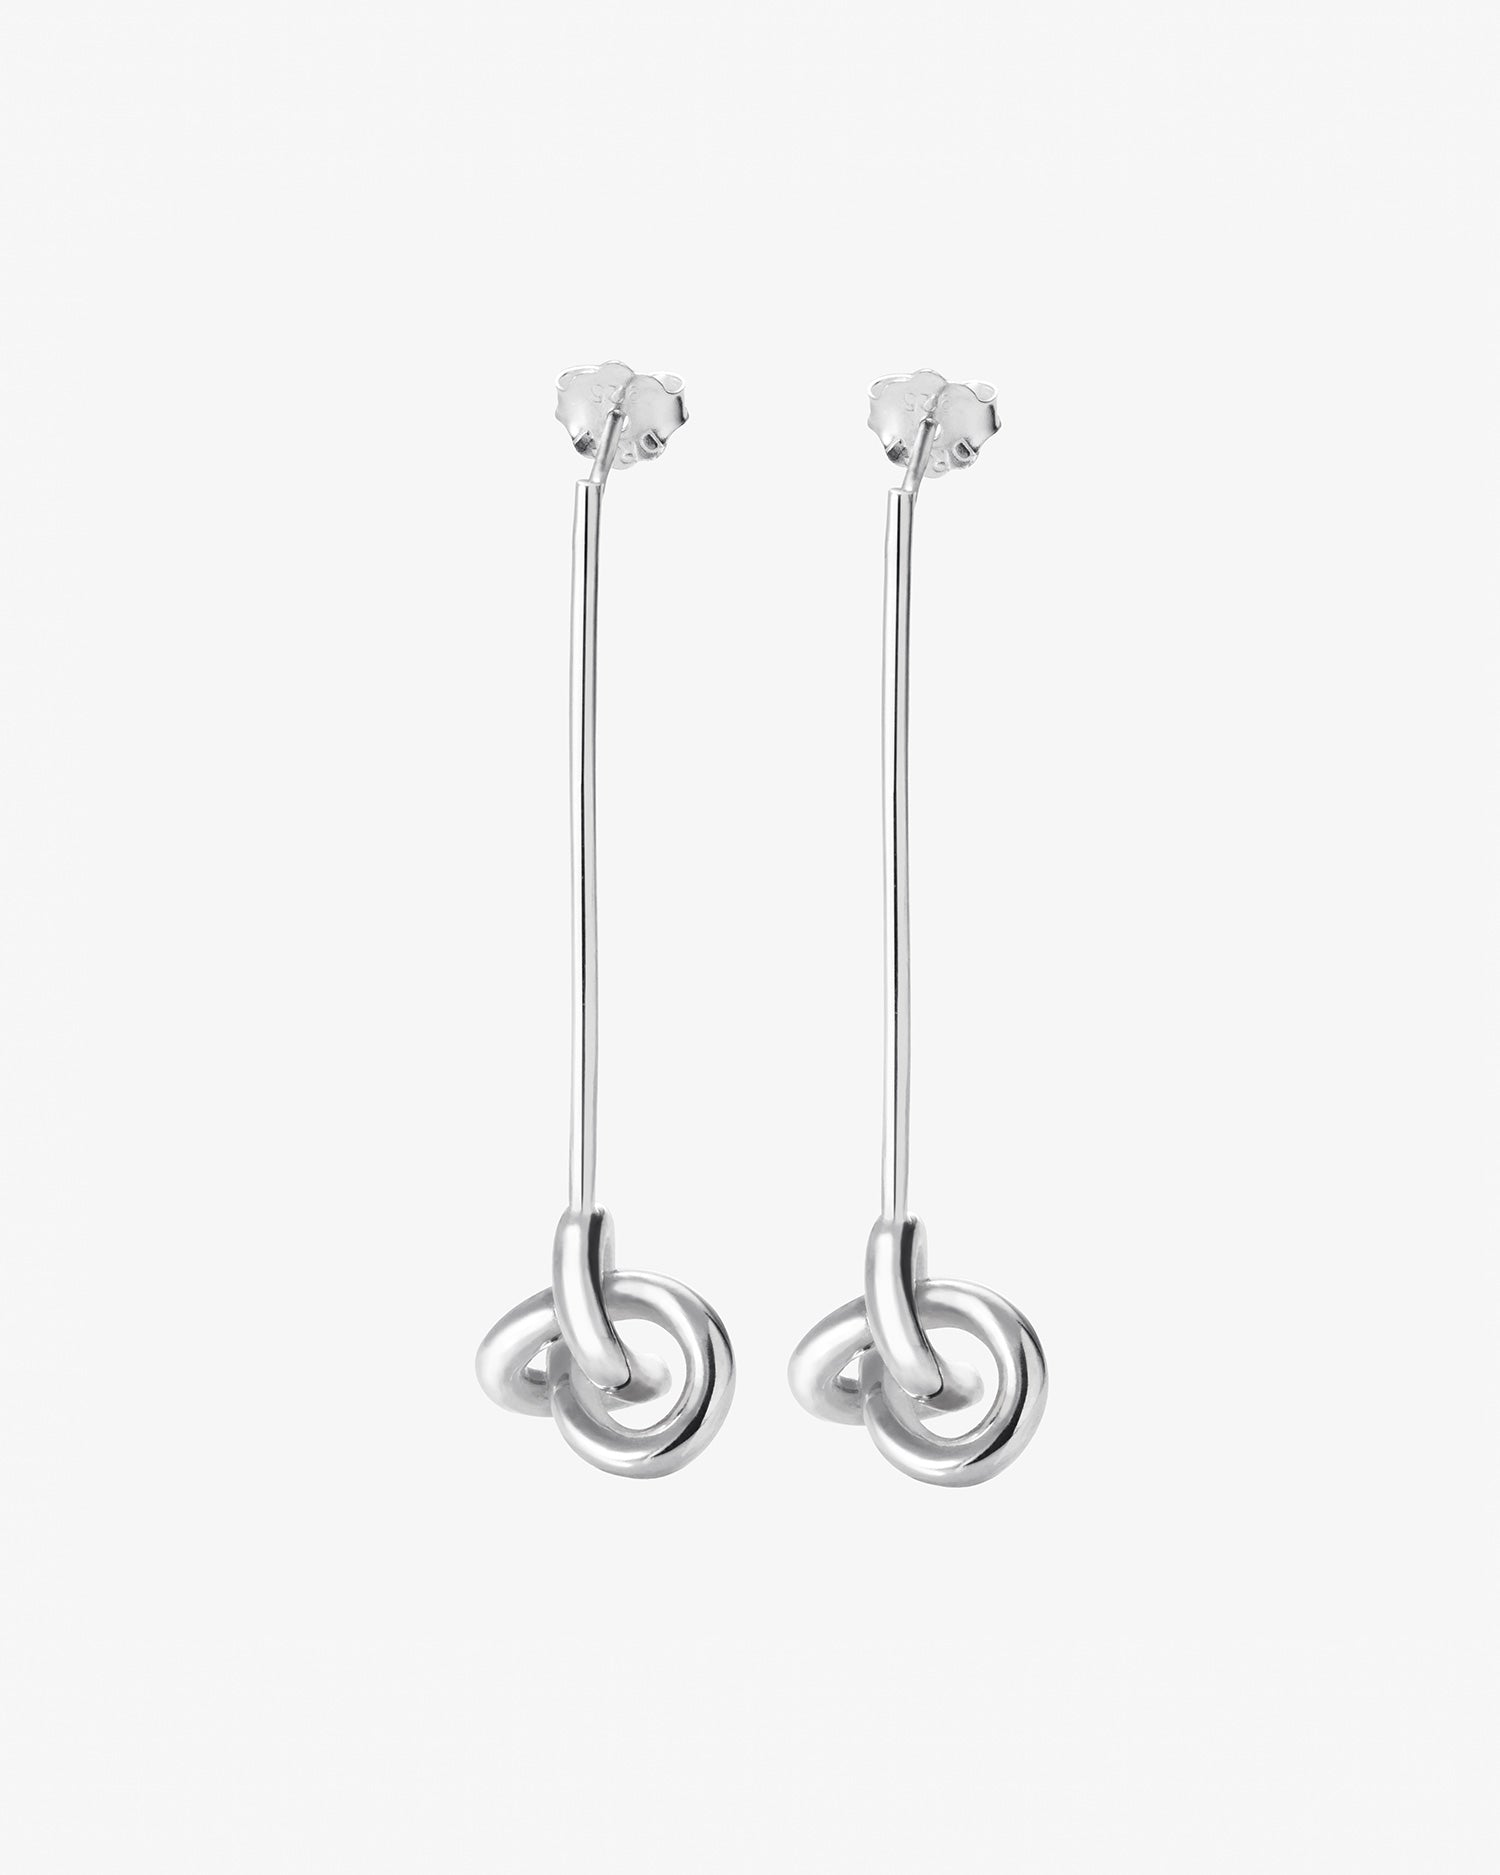 le-knot-earrings-03